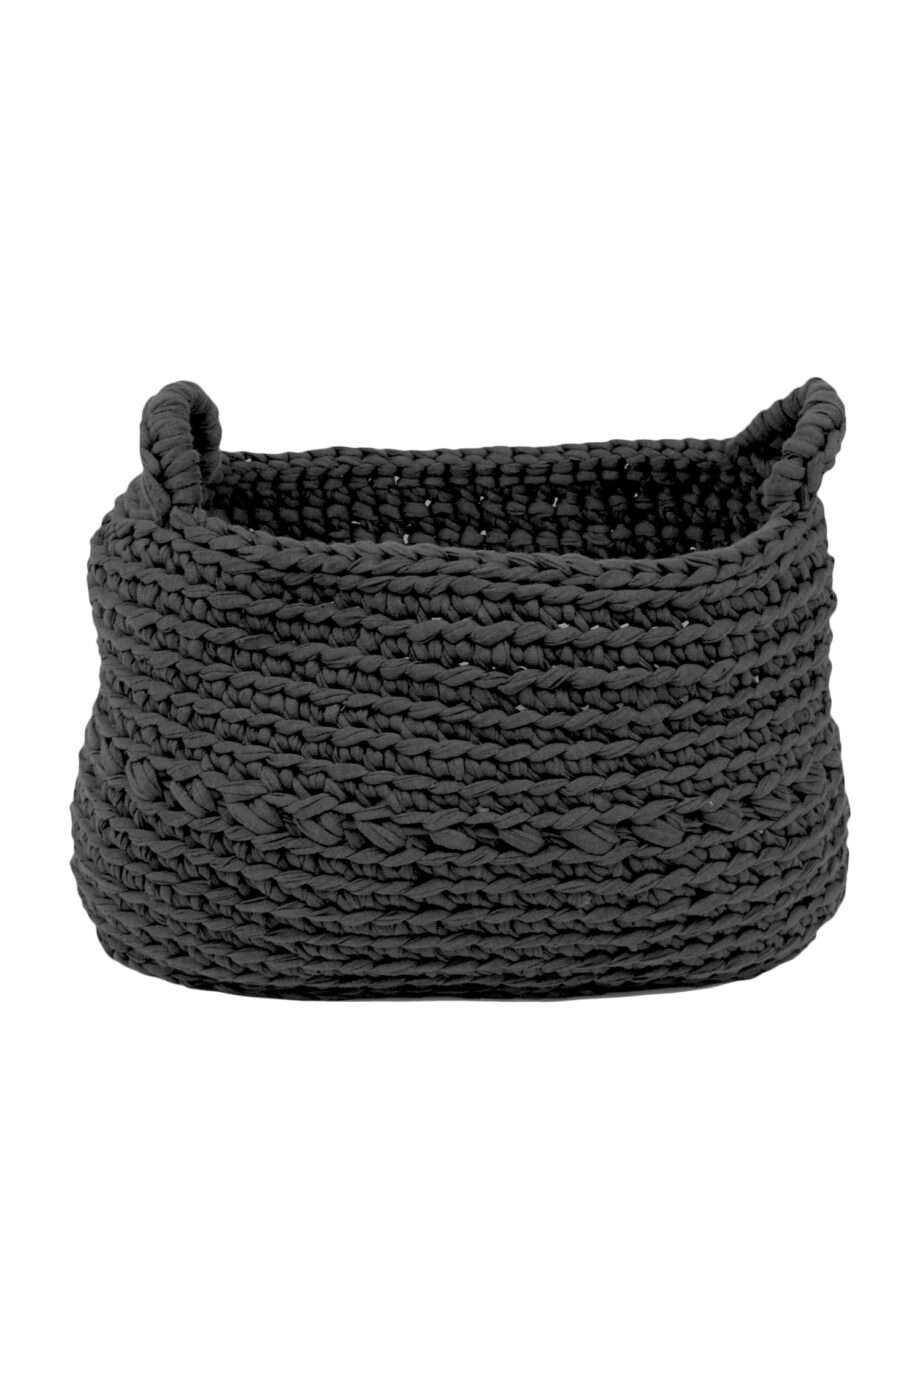 basic anthracite crochet cotton basket xxlarge